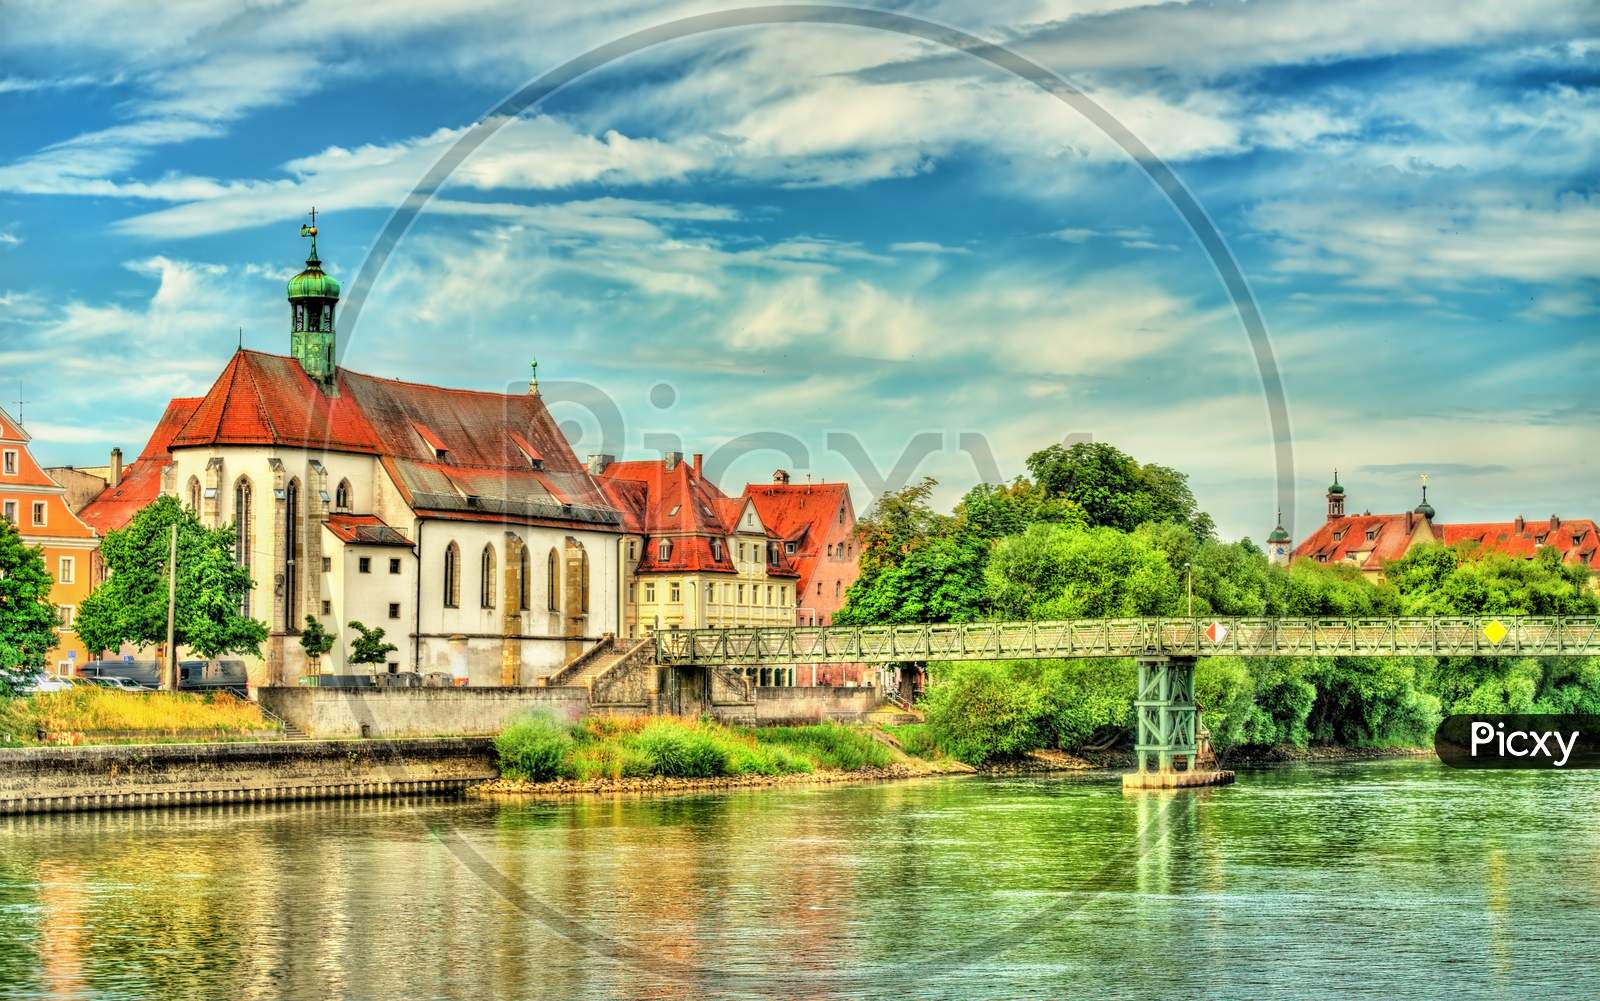 St. Oswald Church With Eiserner Steg Bridge Across The Danube River In Regensburg, Germany